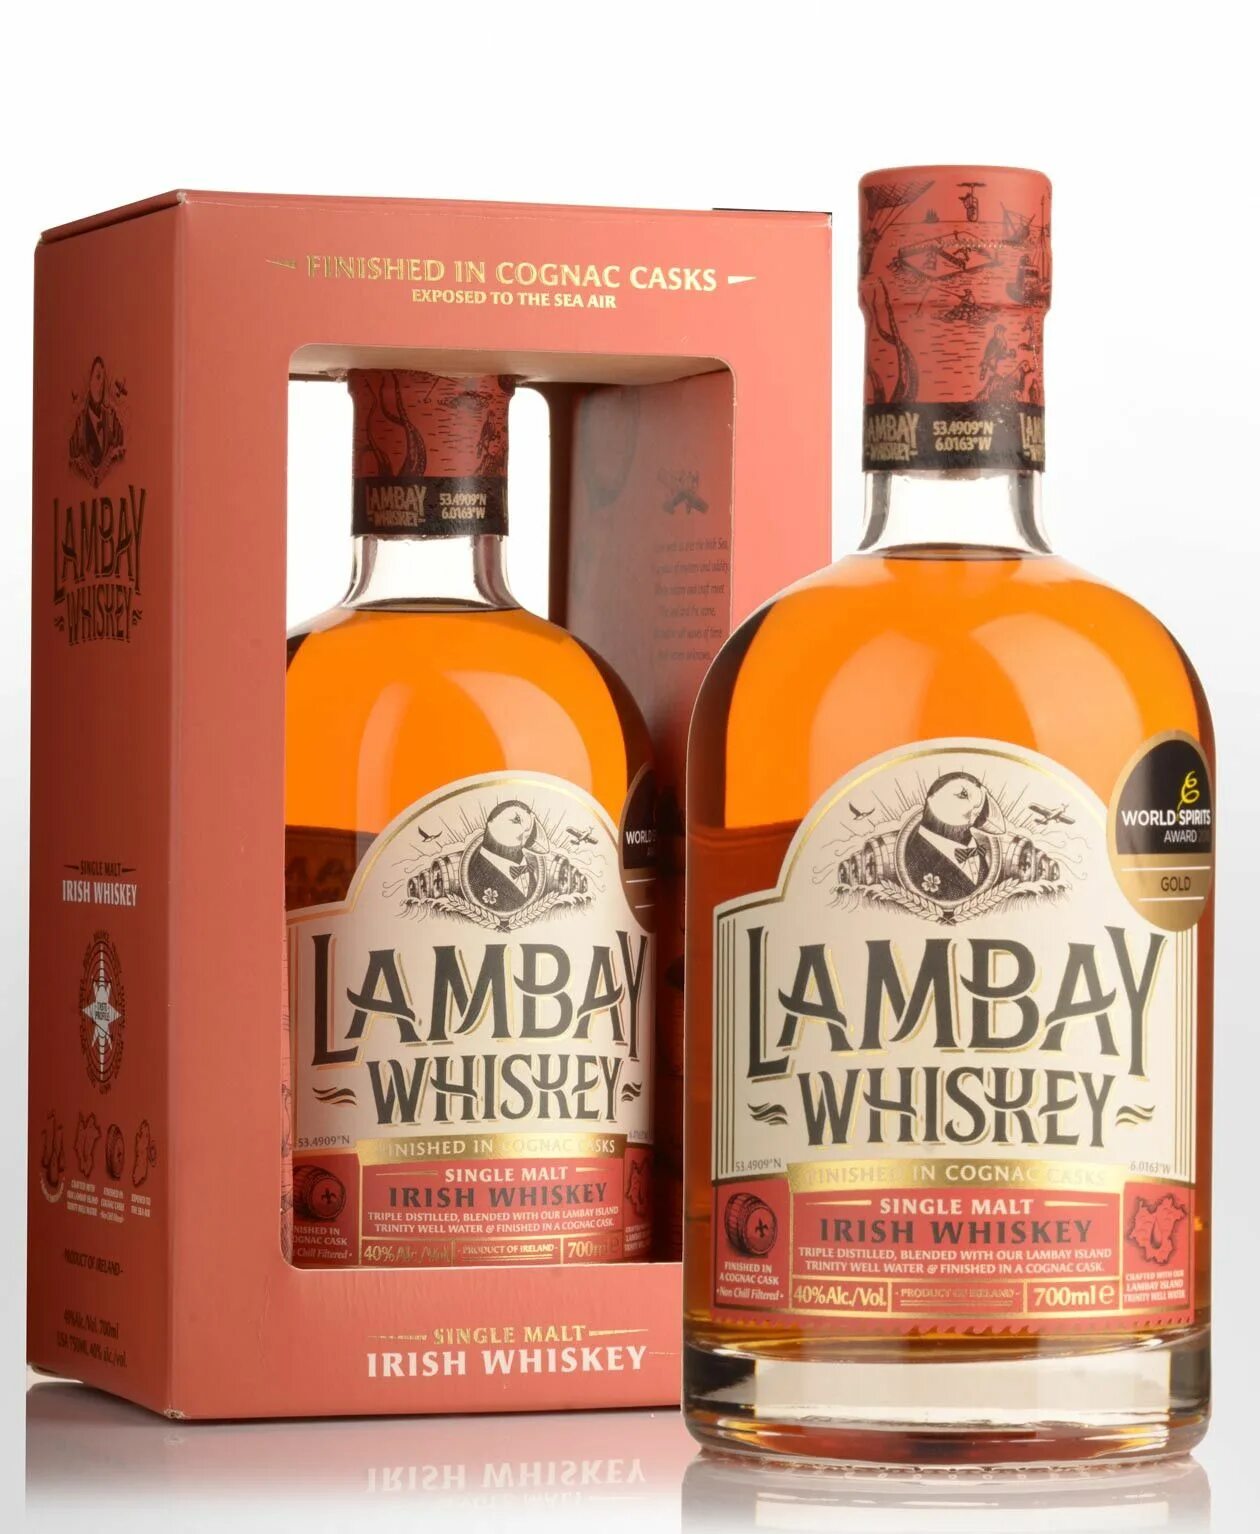 Виски Lambay Malt Irish Whiskey. Виски "Lambay" Malt Irish Whiskey, Gift Box, 0.7 л. Single Malt виски Irish Whiskey. Lambay Whiskey Single Malt. Irish malt